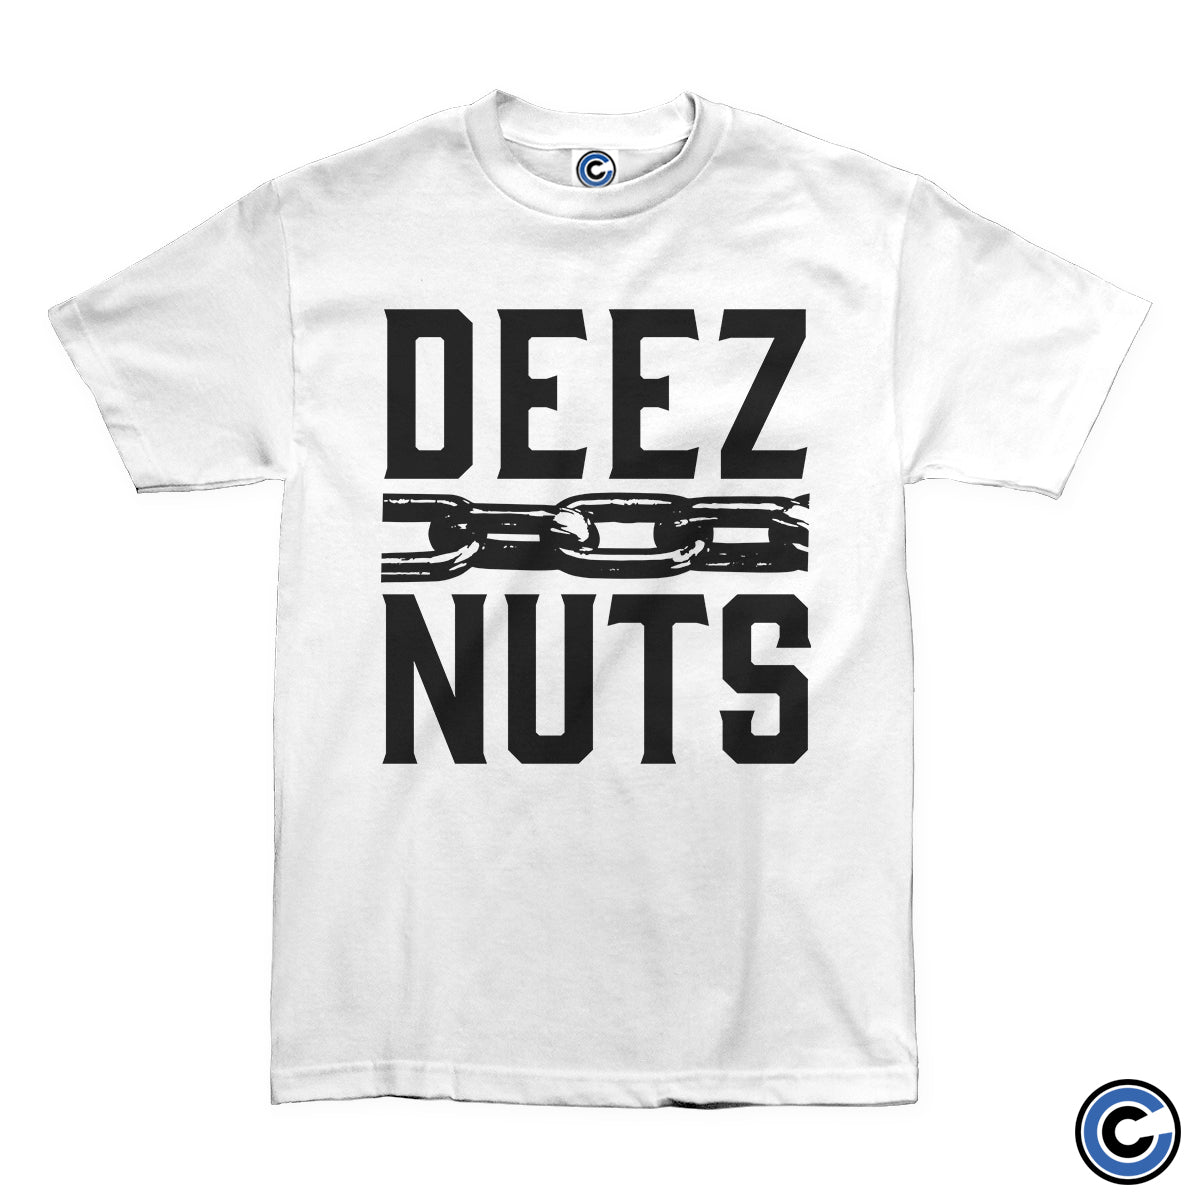 Deez Nuts "Chain" Shirt